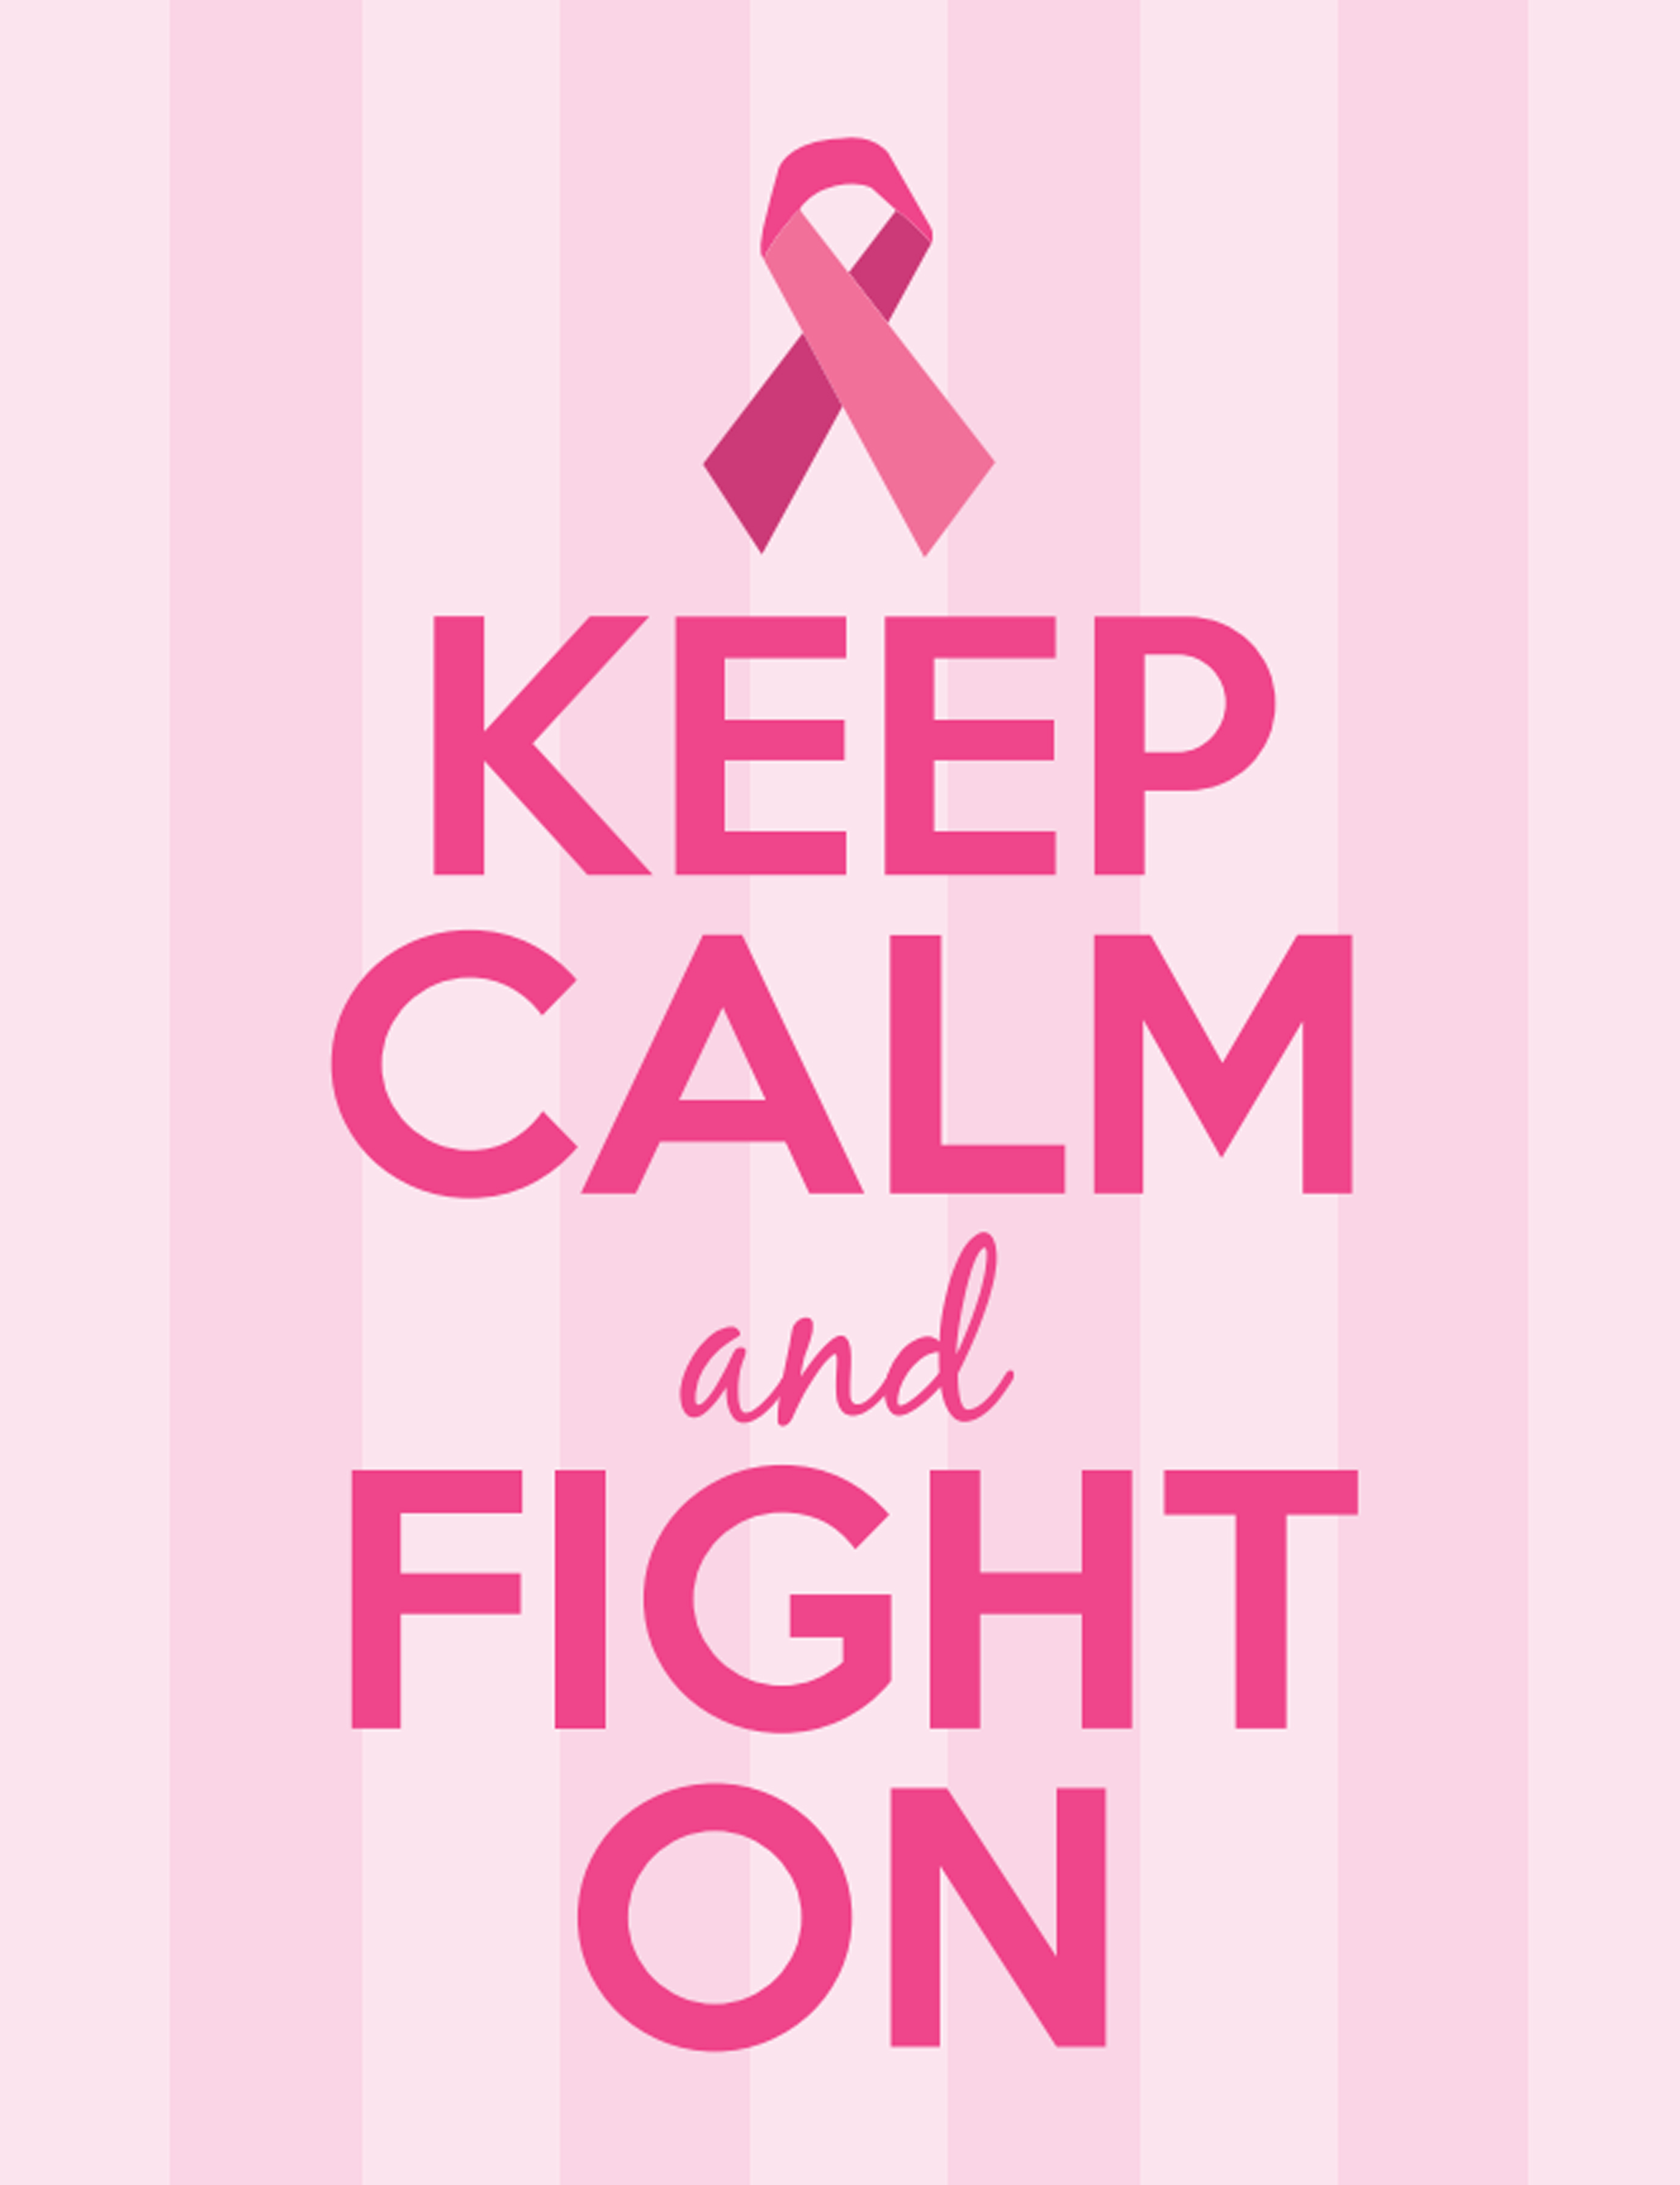 15469 Breast cancer awareness Vector Images  Depositphotos